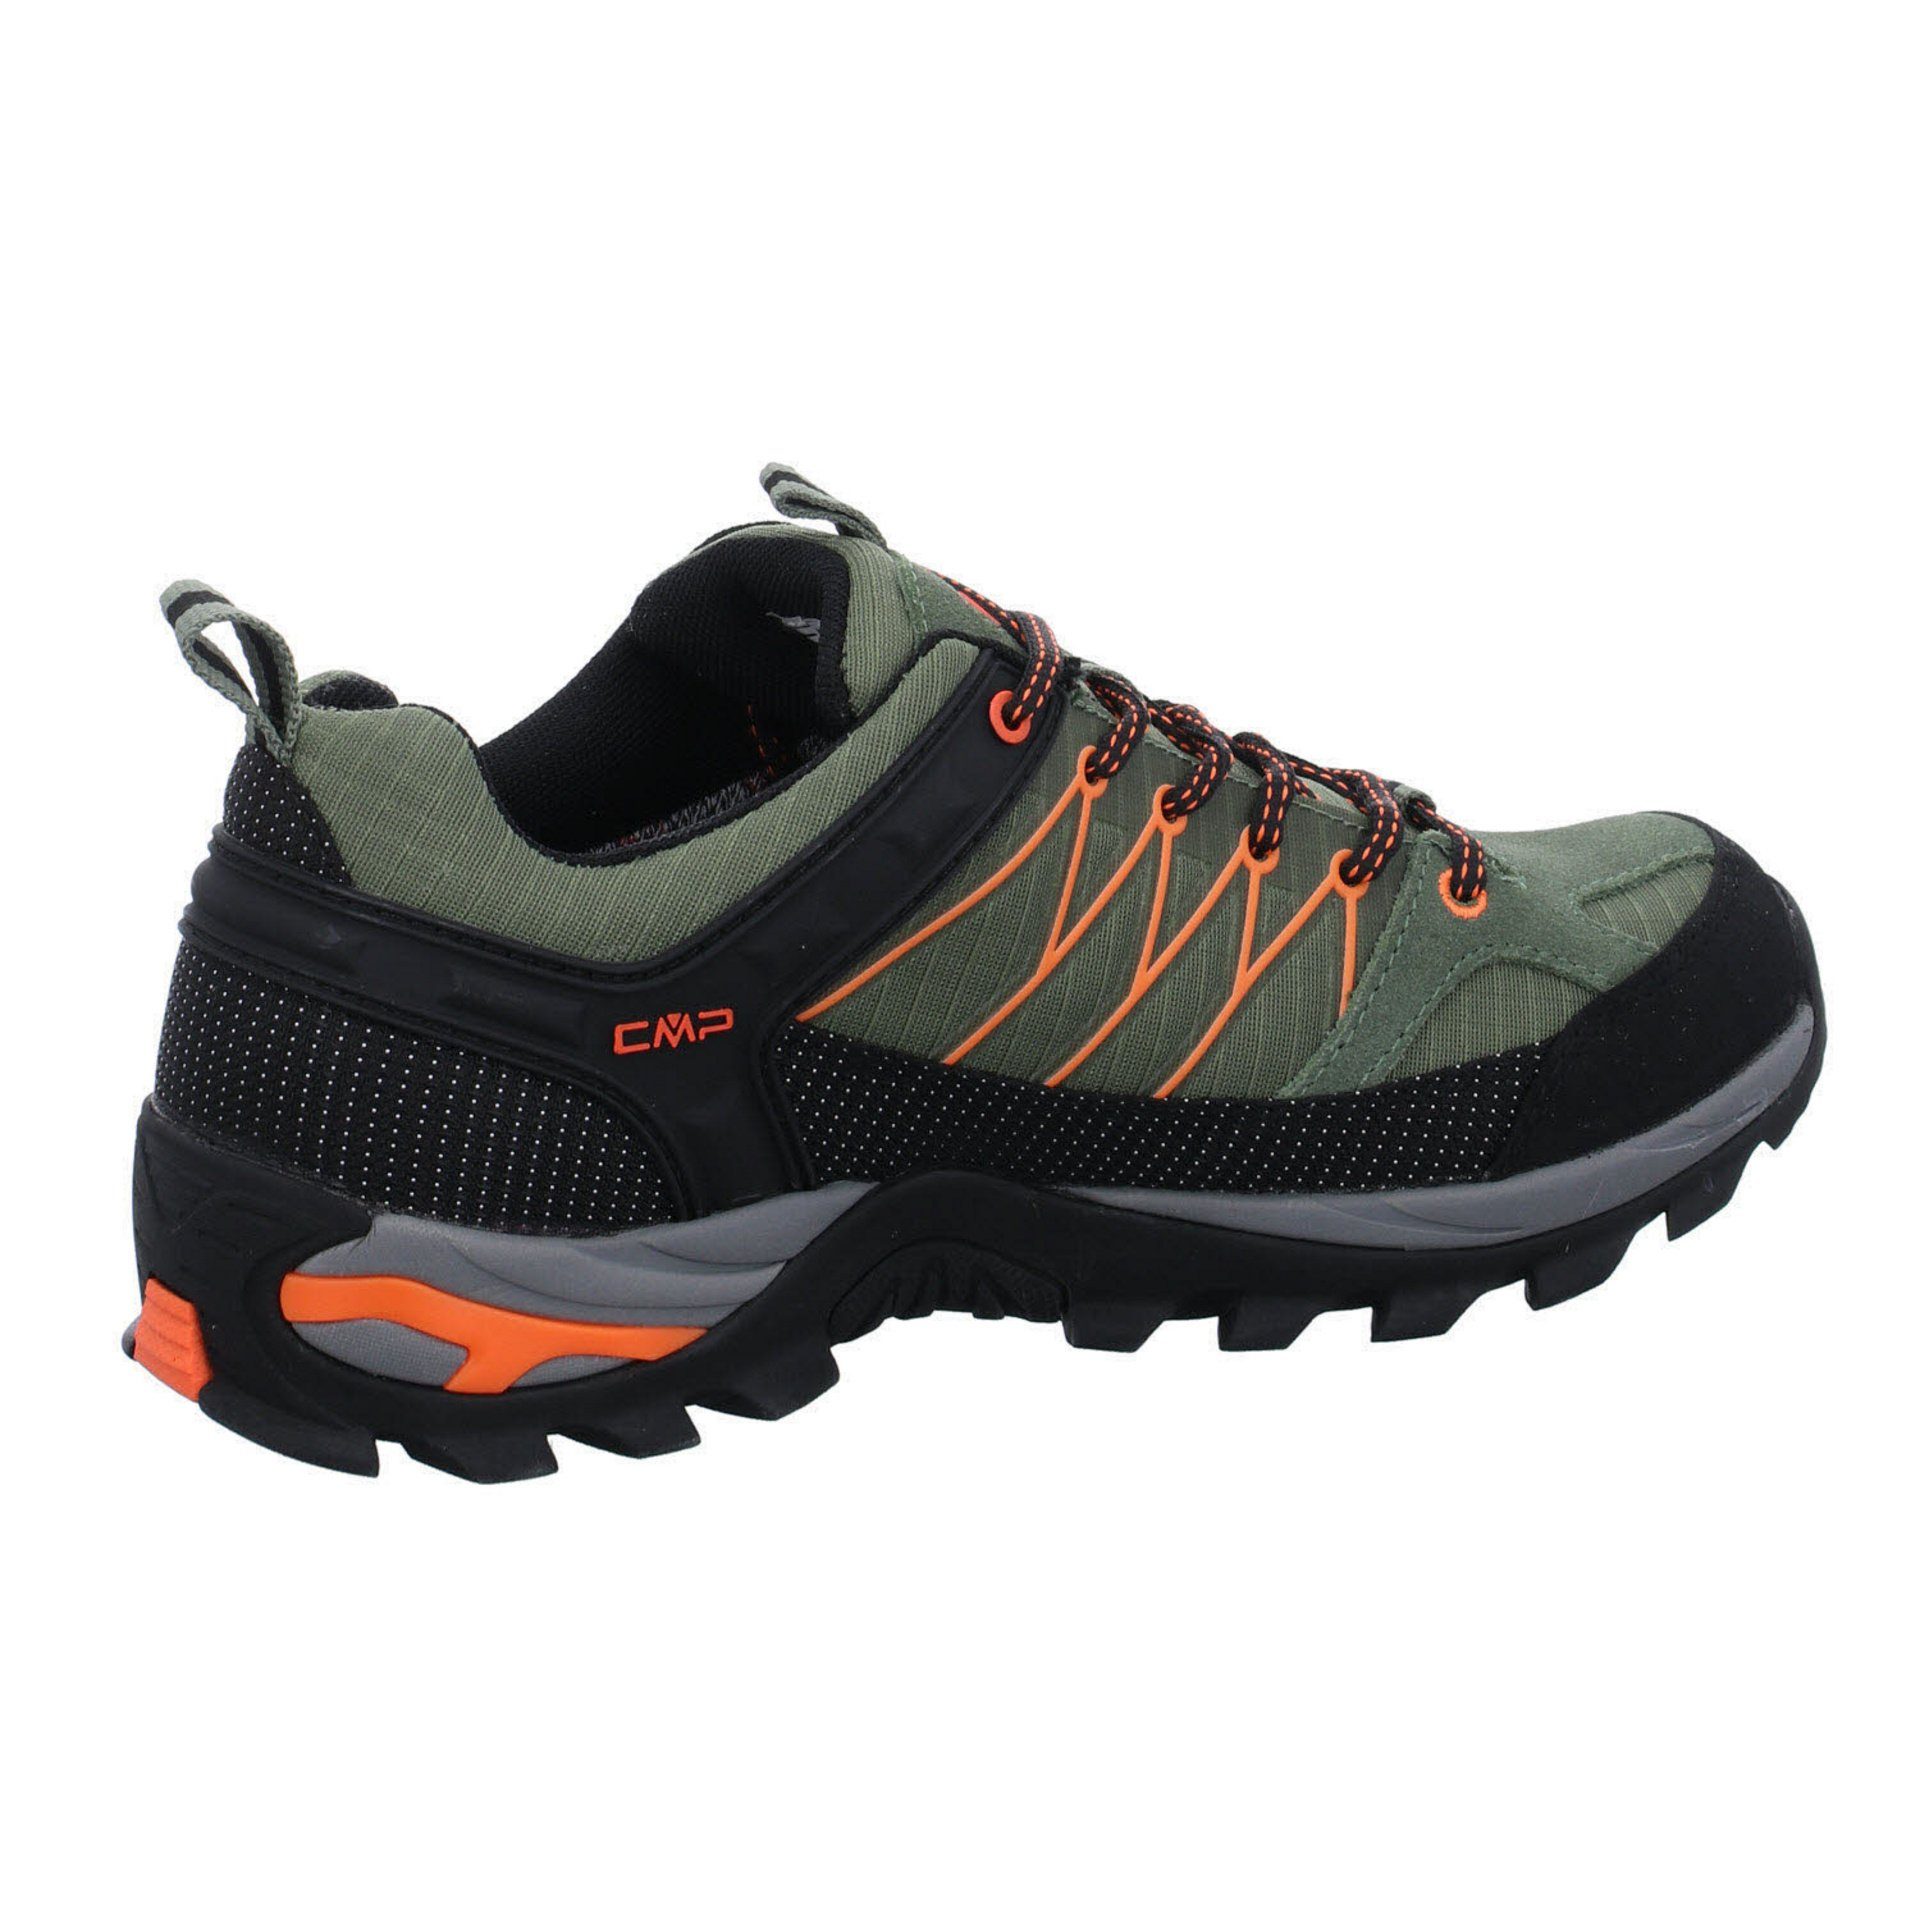 Outdoorschuh Herren (03201907) Outdoor Outdoorschuh TORBA-FLASH Schuhe Low Rigel CMP Leder-/Textilkombination